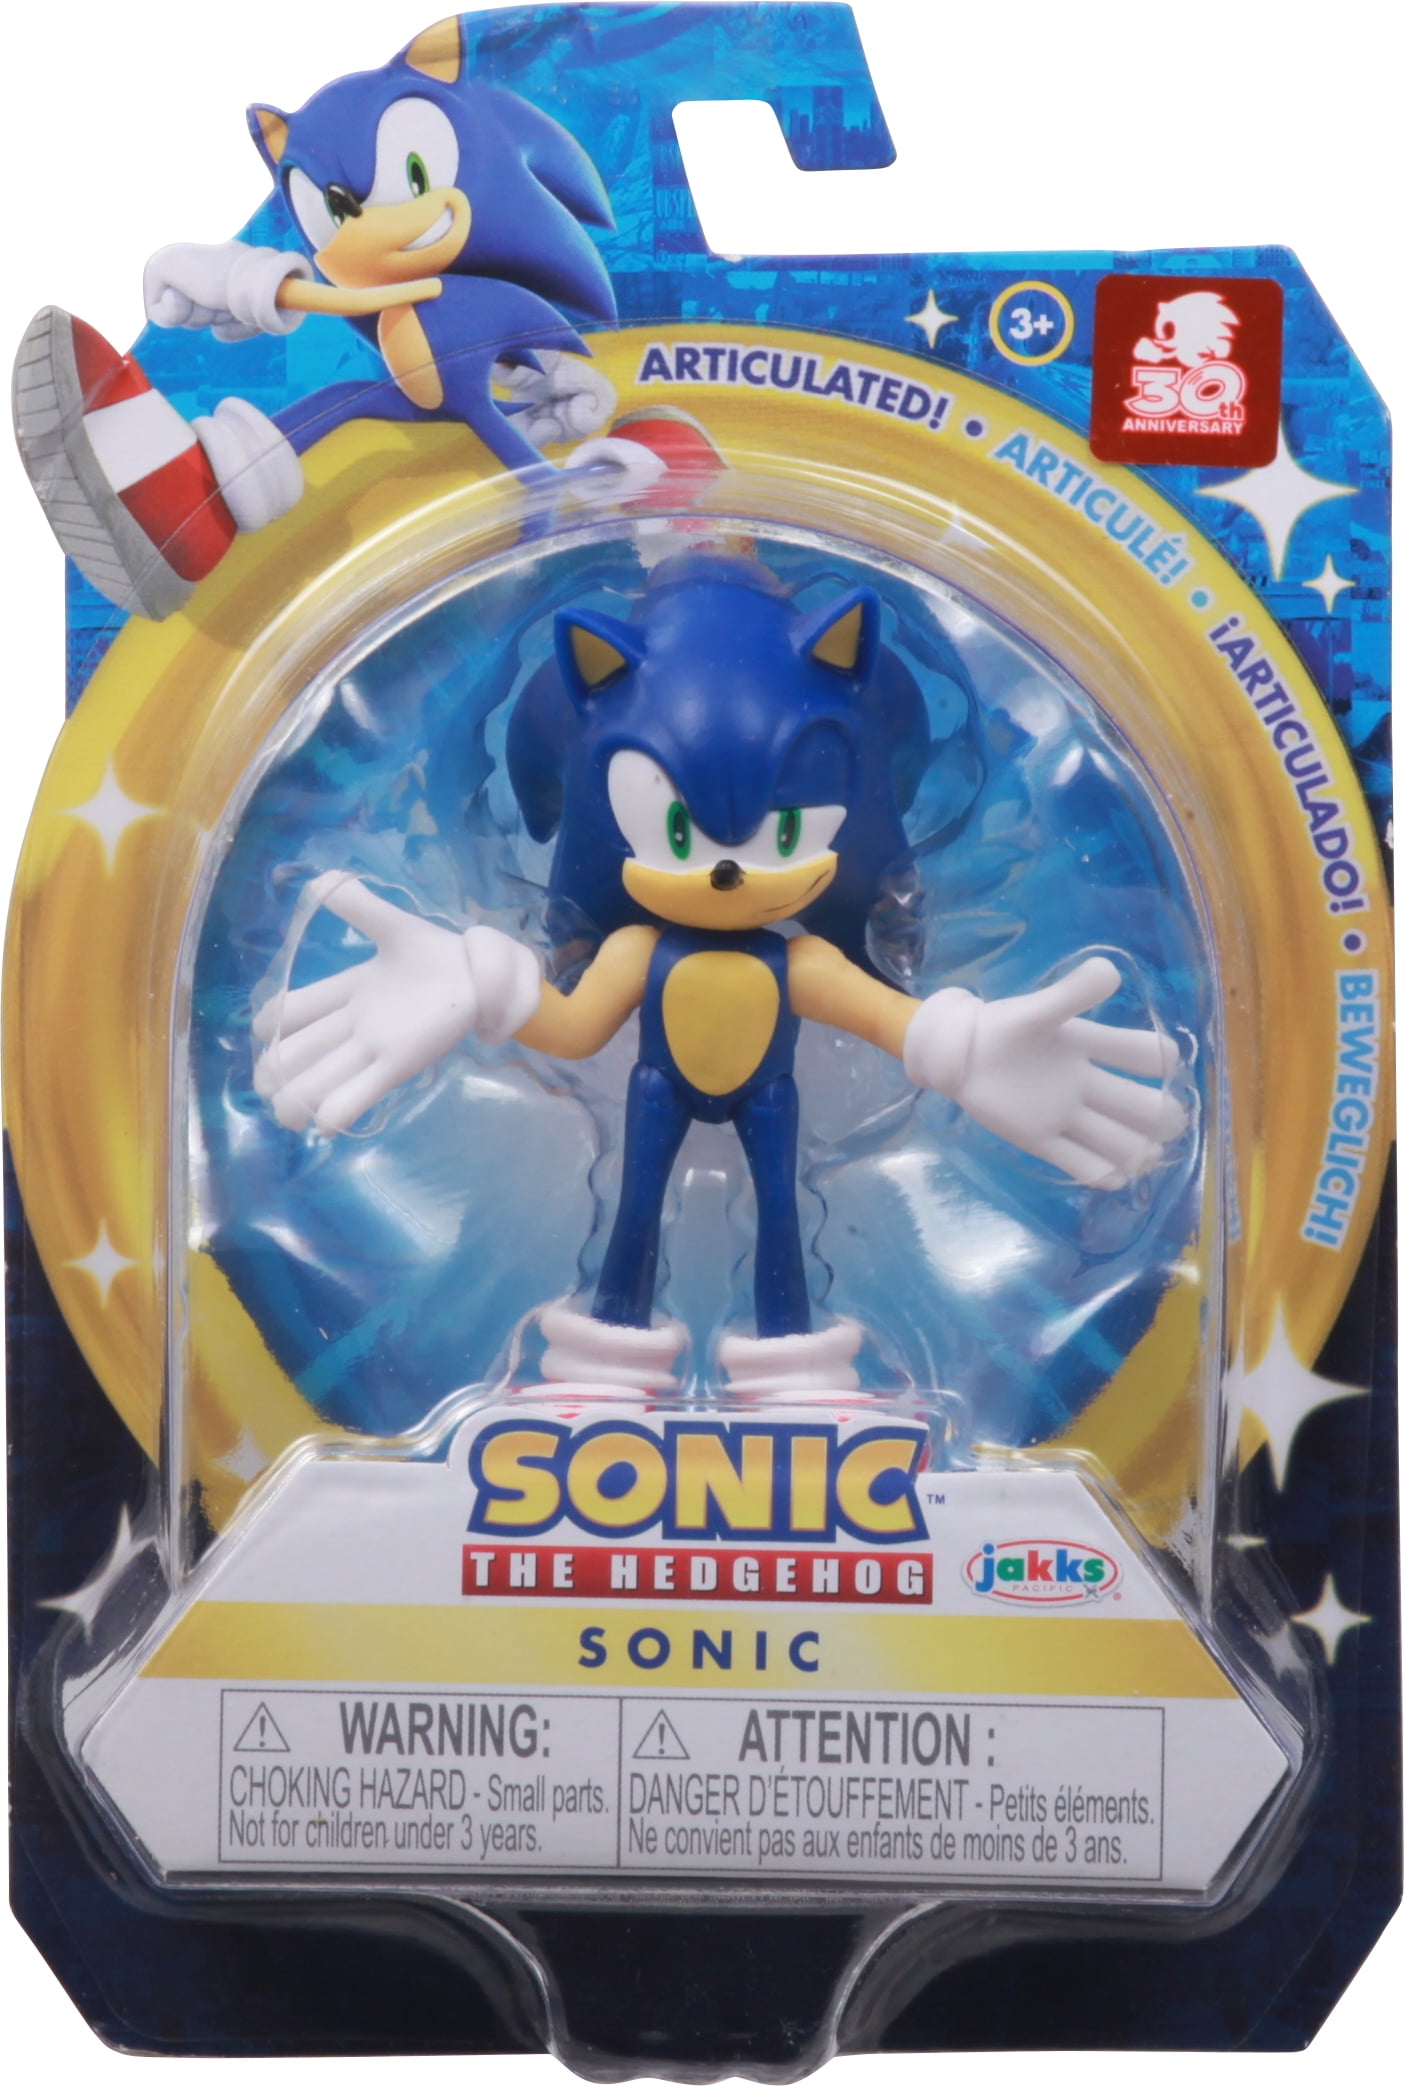 2021 Jakks Pacific Sonic The Hedgehog 30th Anniversary Action Figure Tails for sale online 